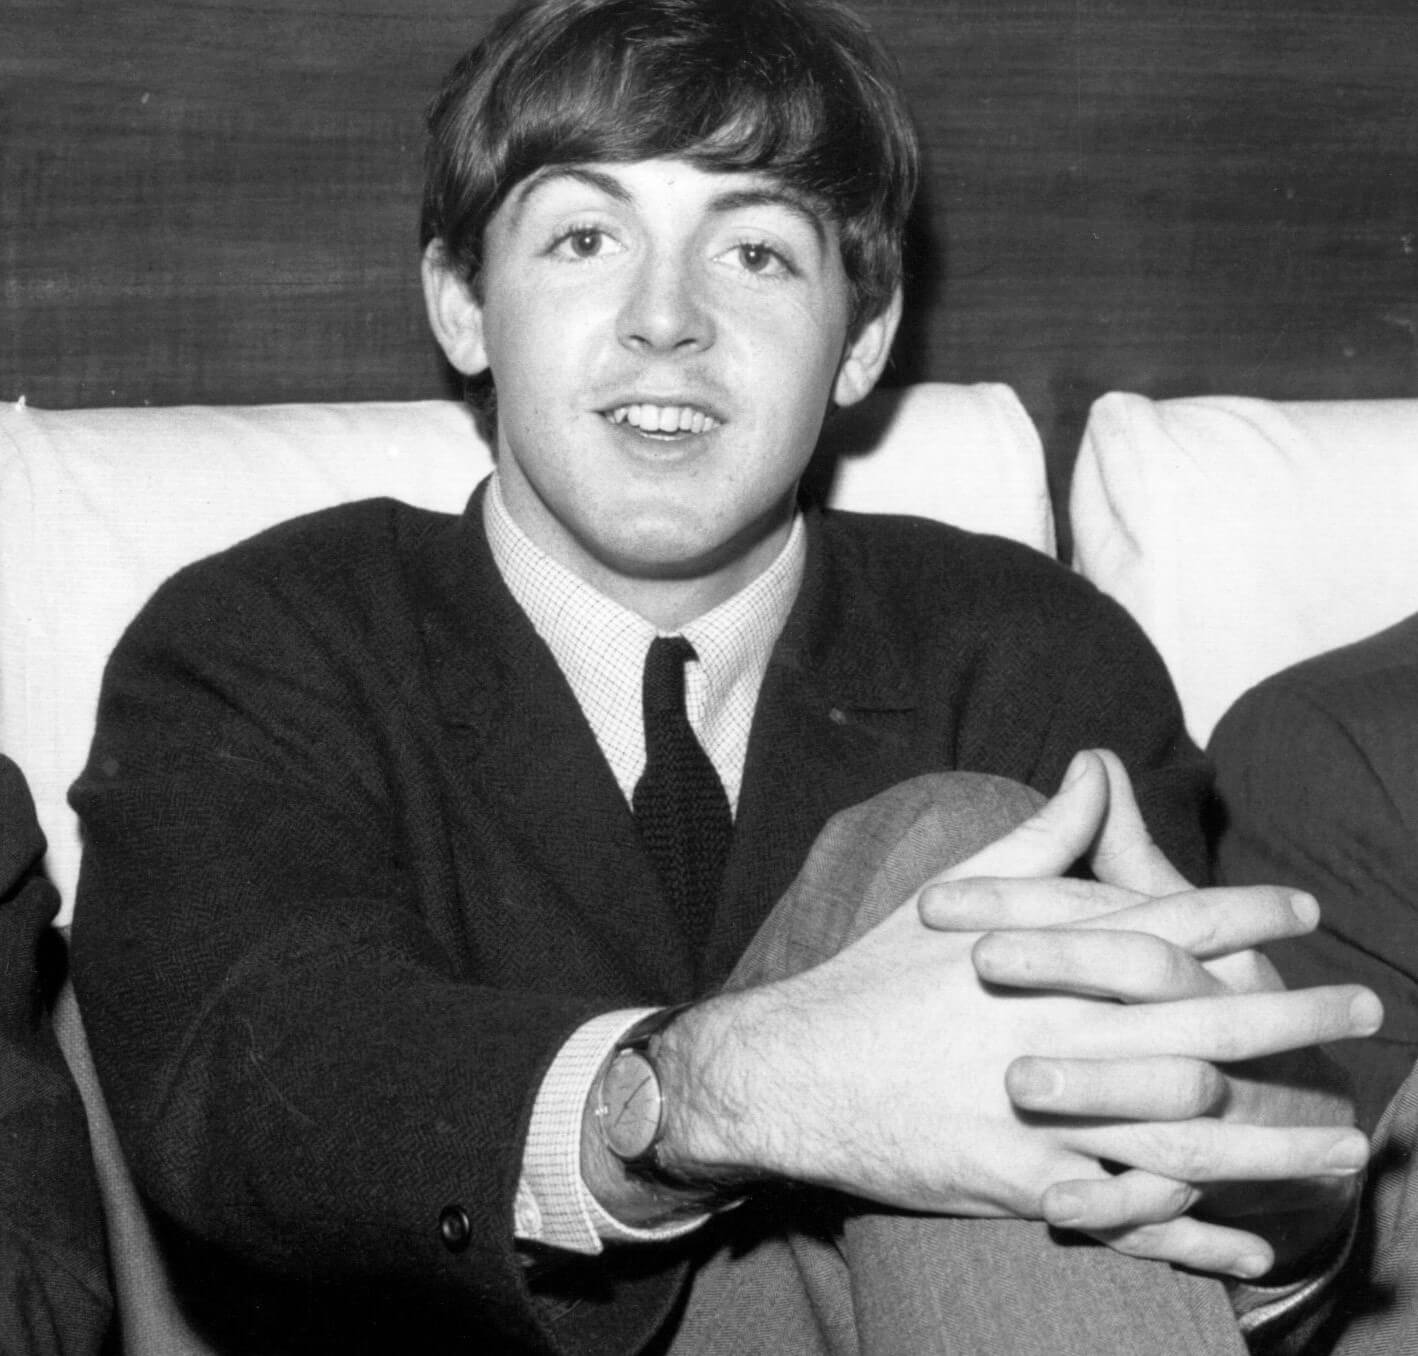 Paul McCartney smiling